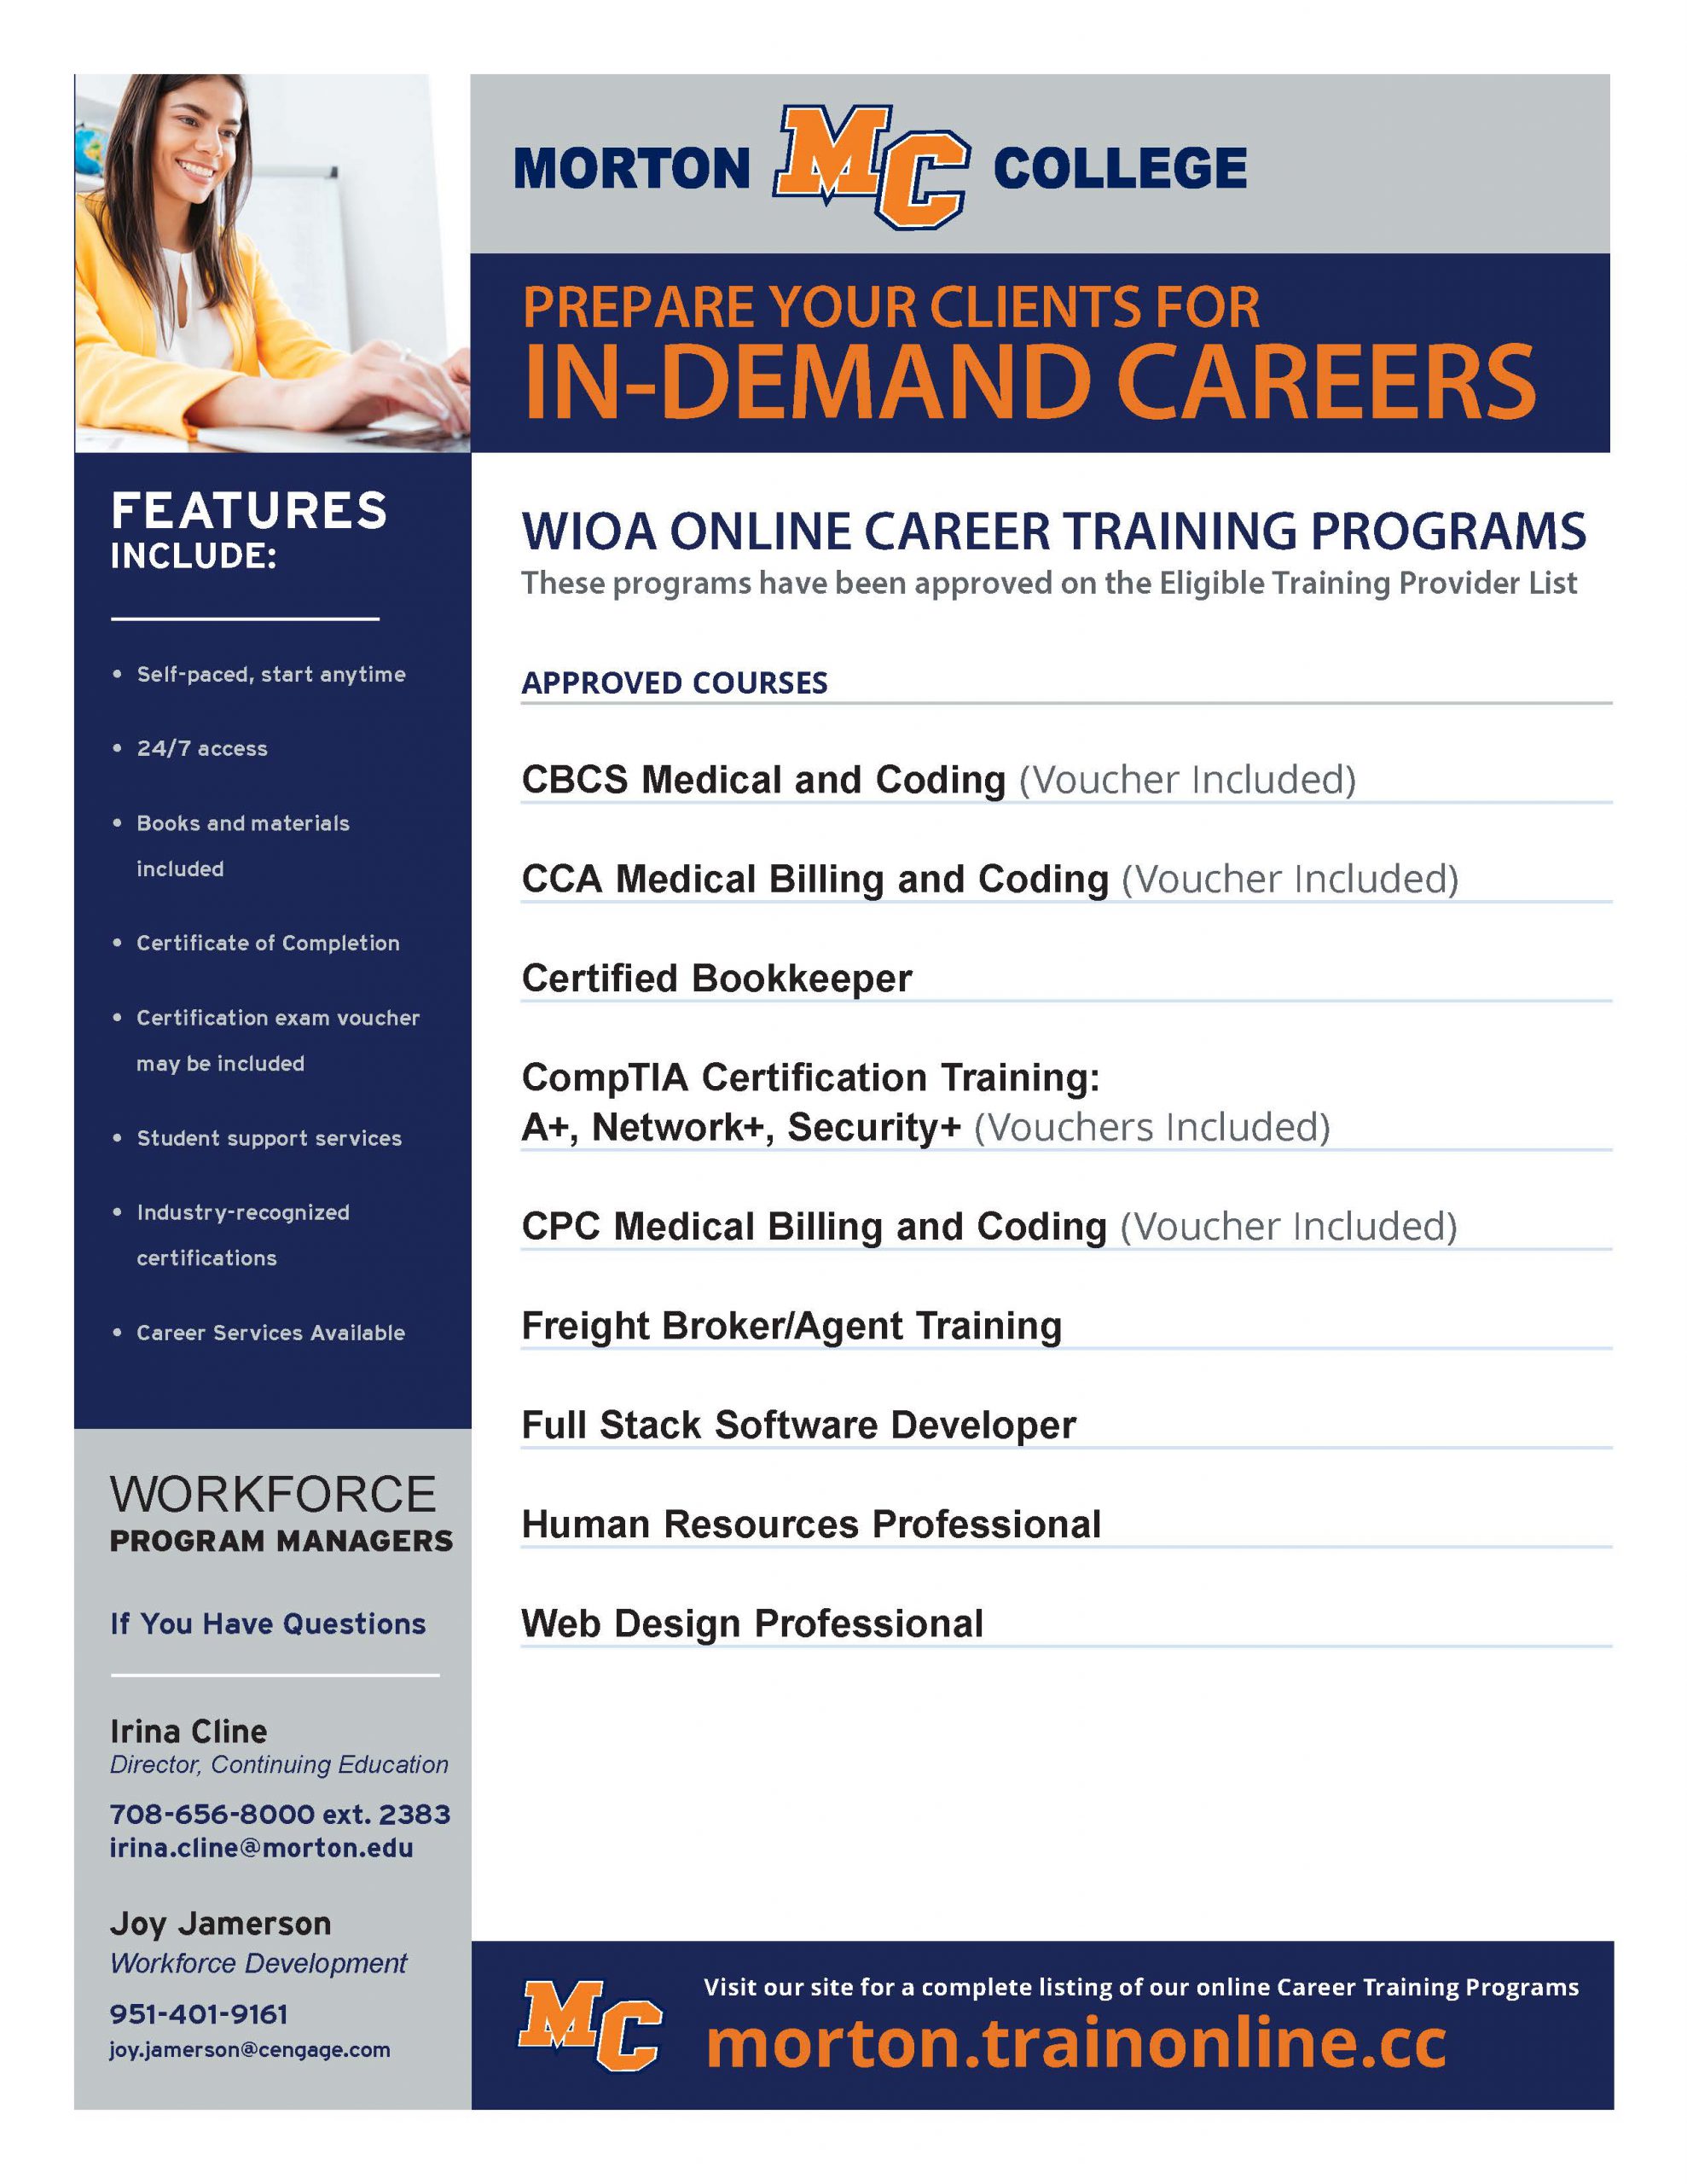 WIOA Online Programs